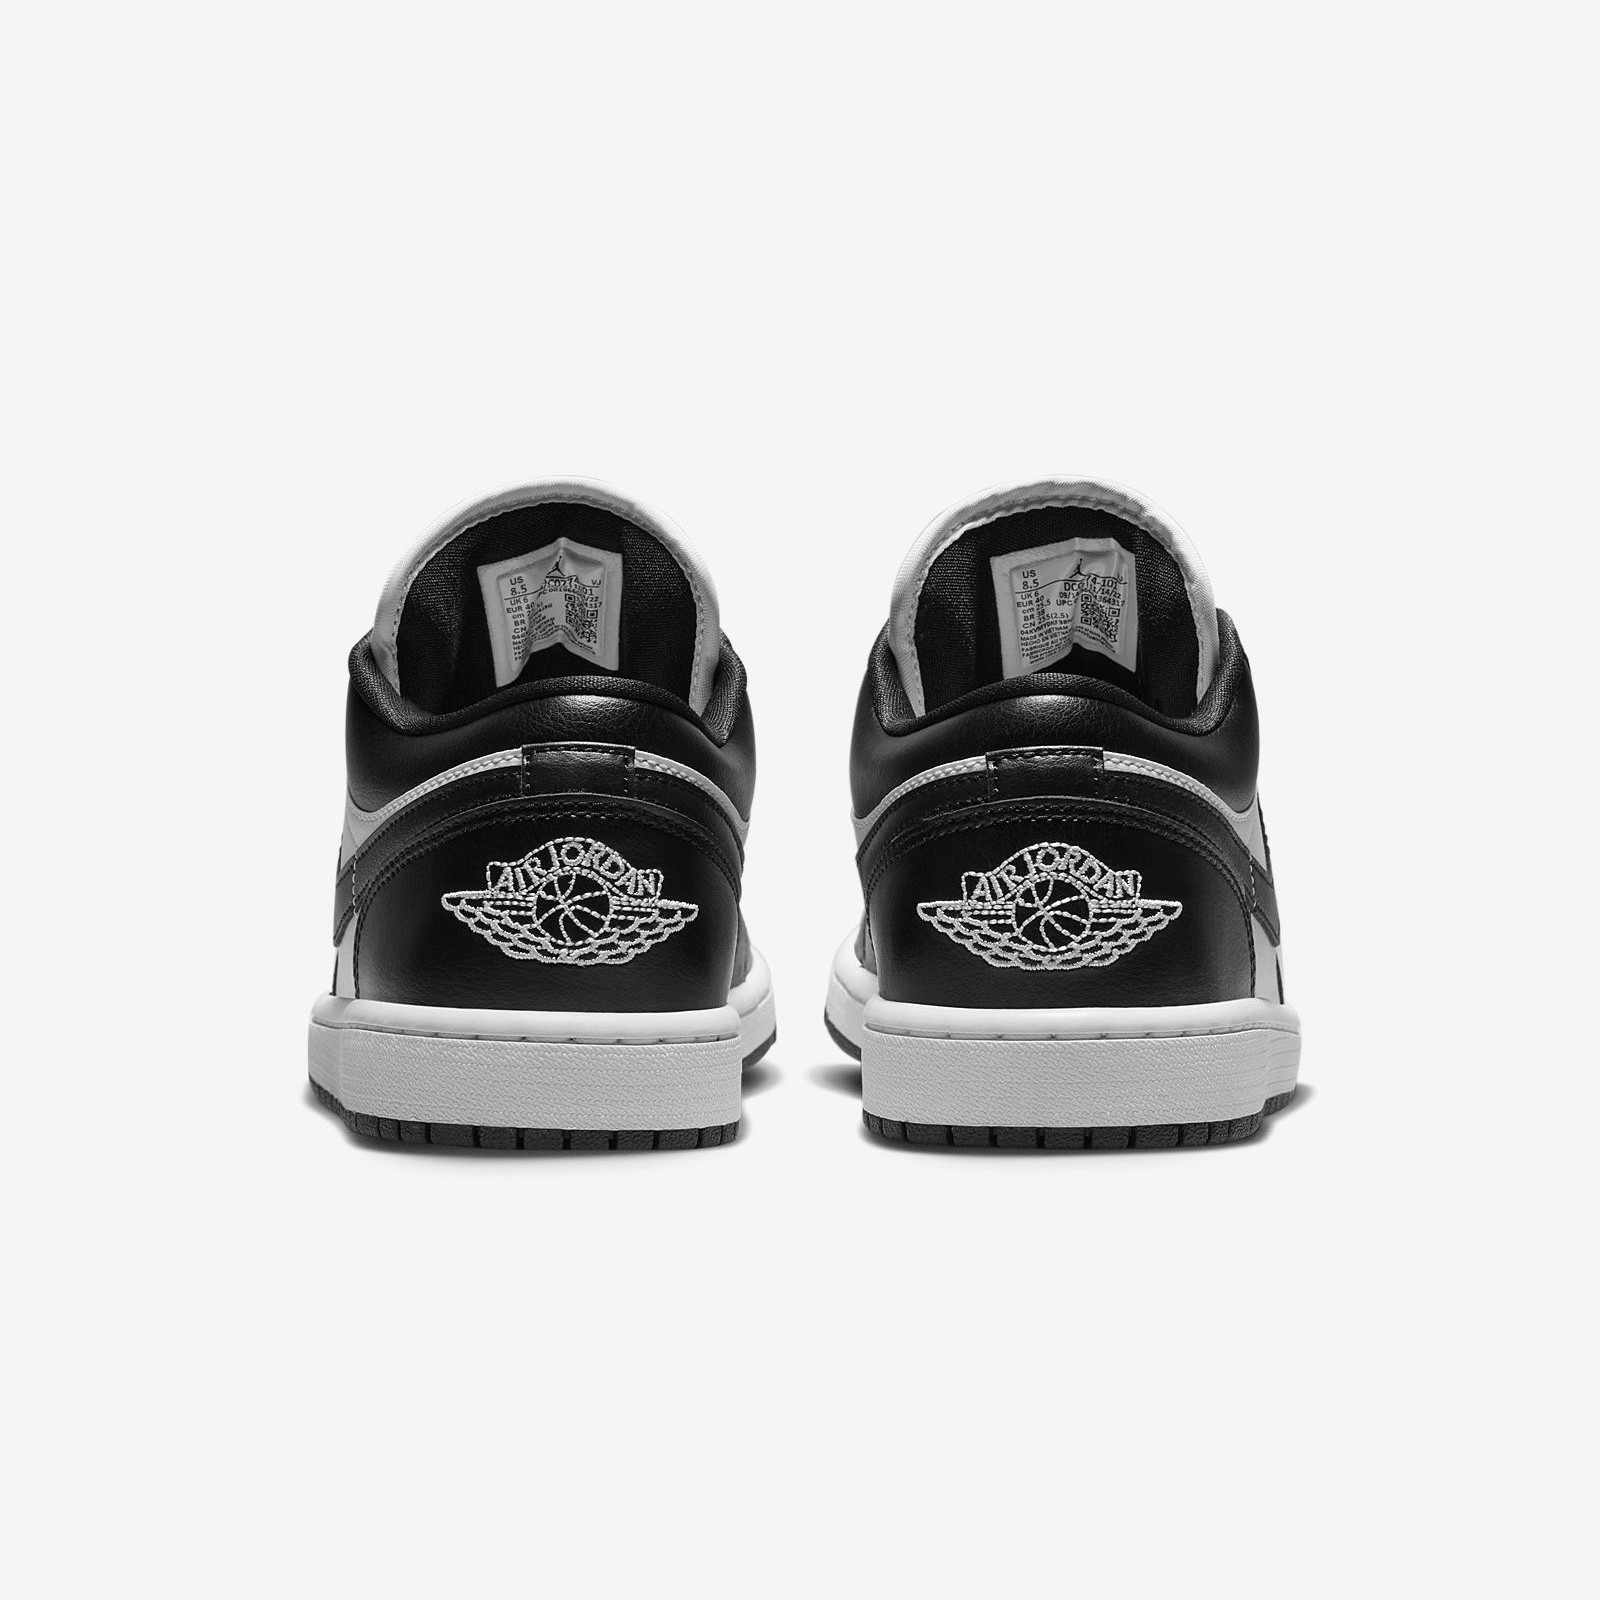 Air Jordan 1 Low
Black / White